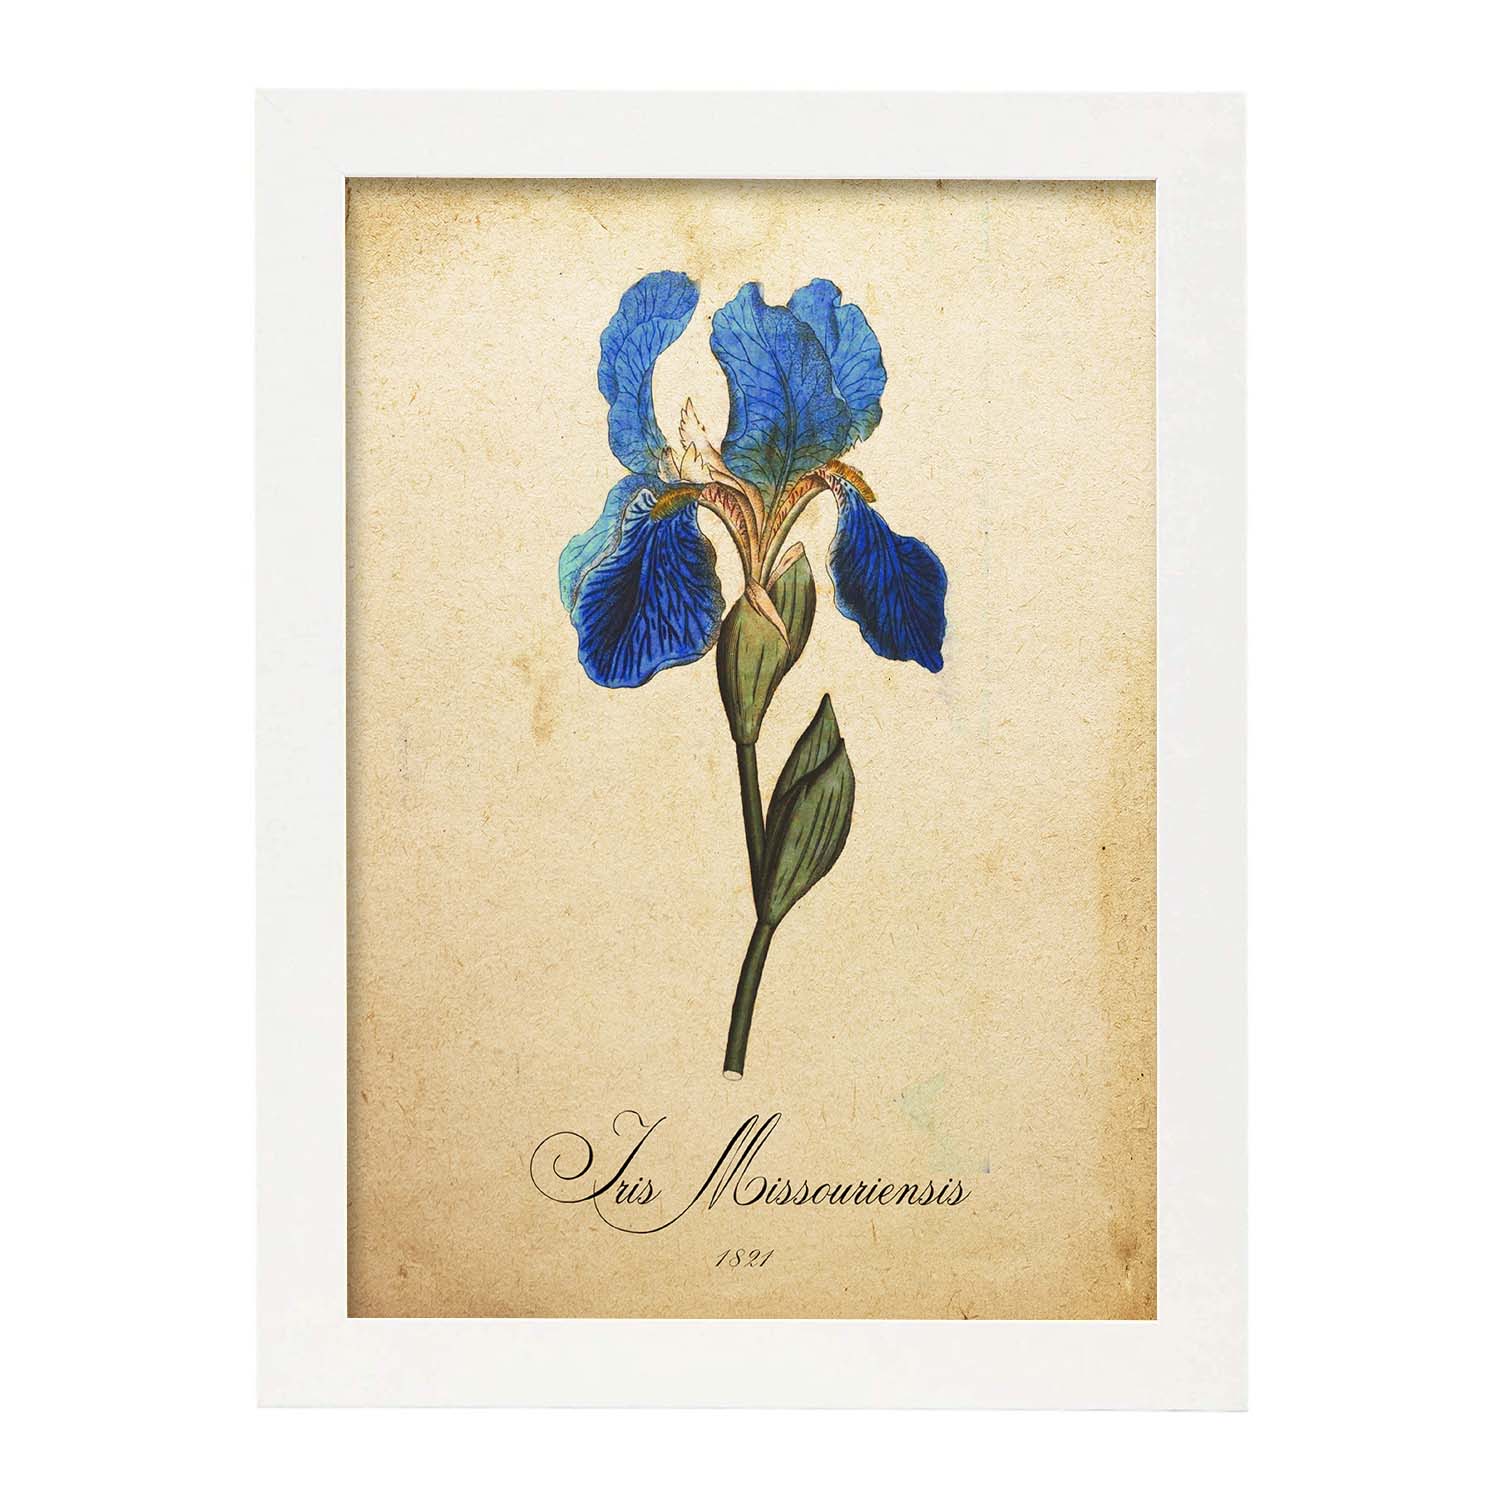 Poster de flores vintage. Lámina Iris missouriensis con diseño vintage.-Artwork-Nacnic-A3-Marco Blanco-Nacnic Estudio SL